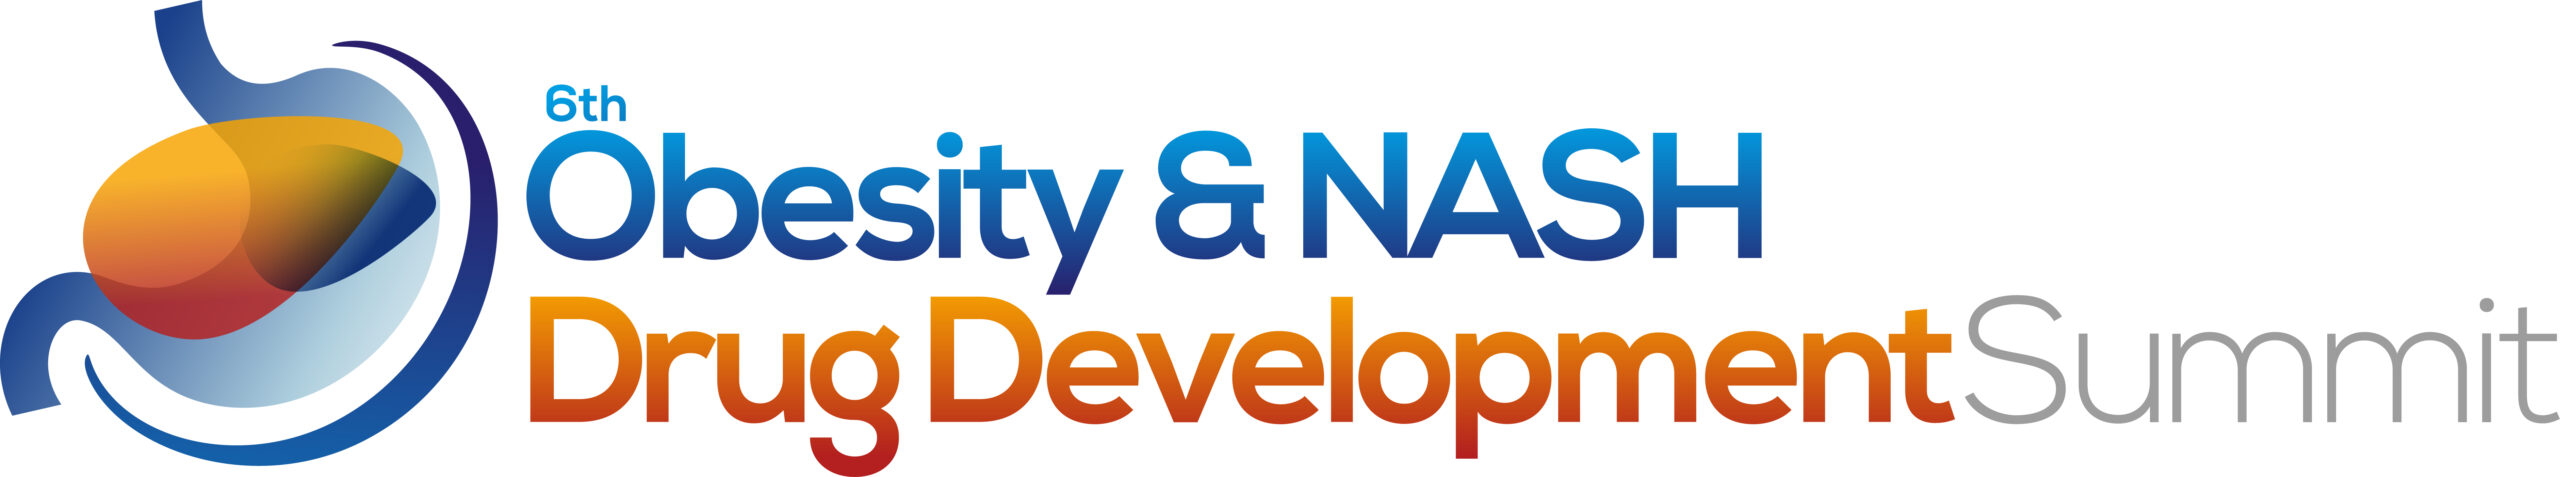 HW220619 25586 6th Obesity & NASH Drug Development Summit NEW COLOURS FINAL